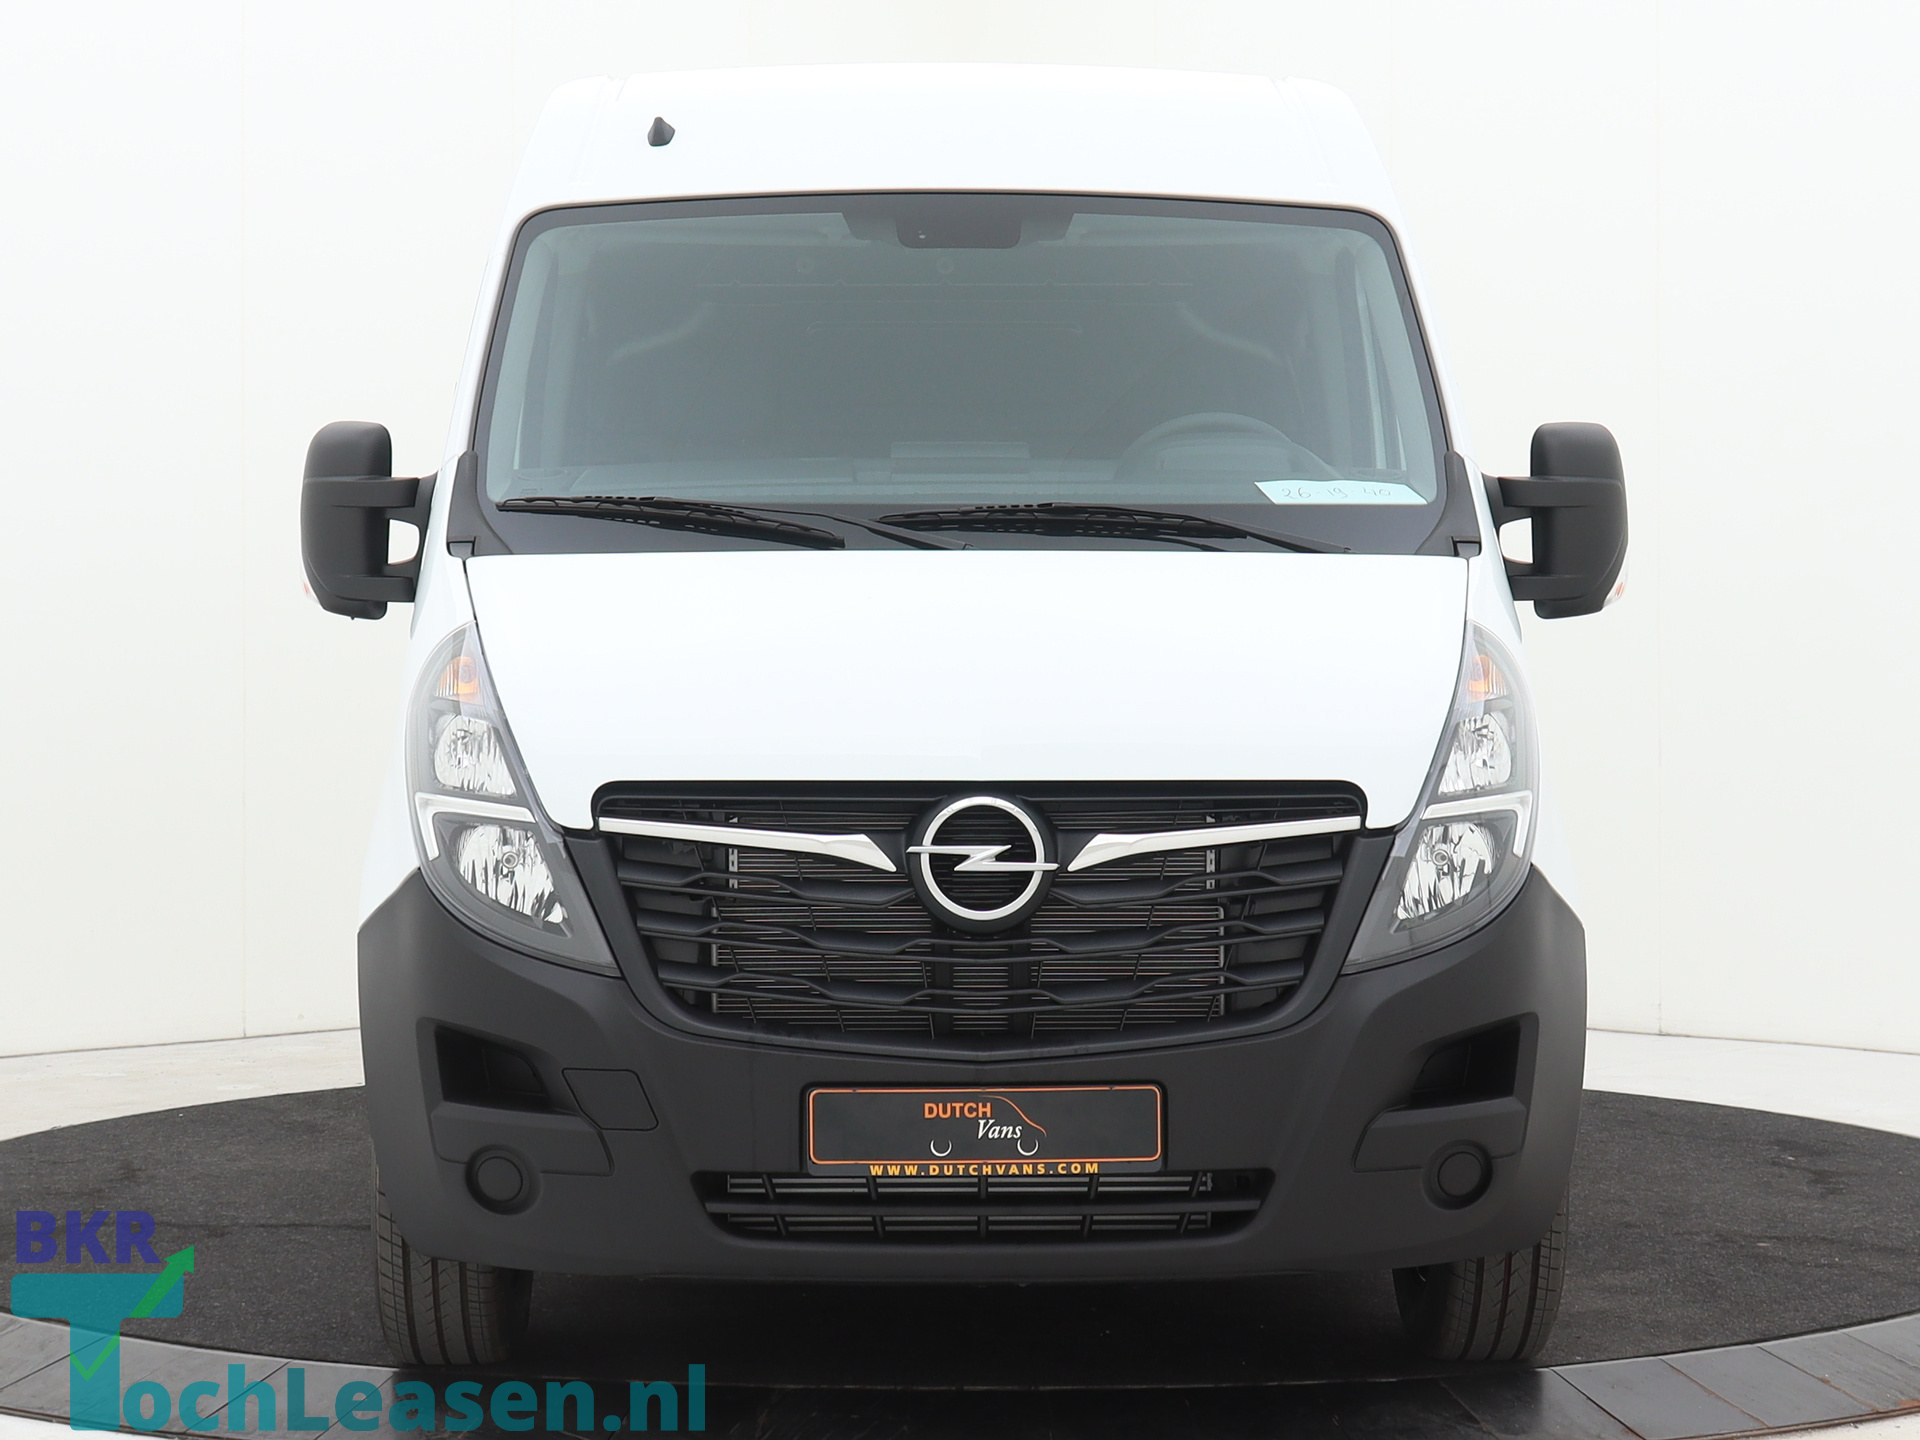 BKRTochLeasen.nl - Opel Movano - L3H2 - wit 05